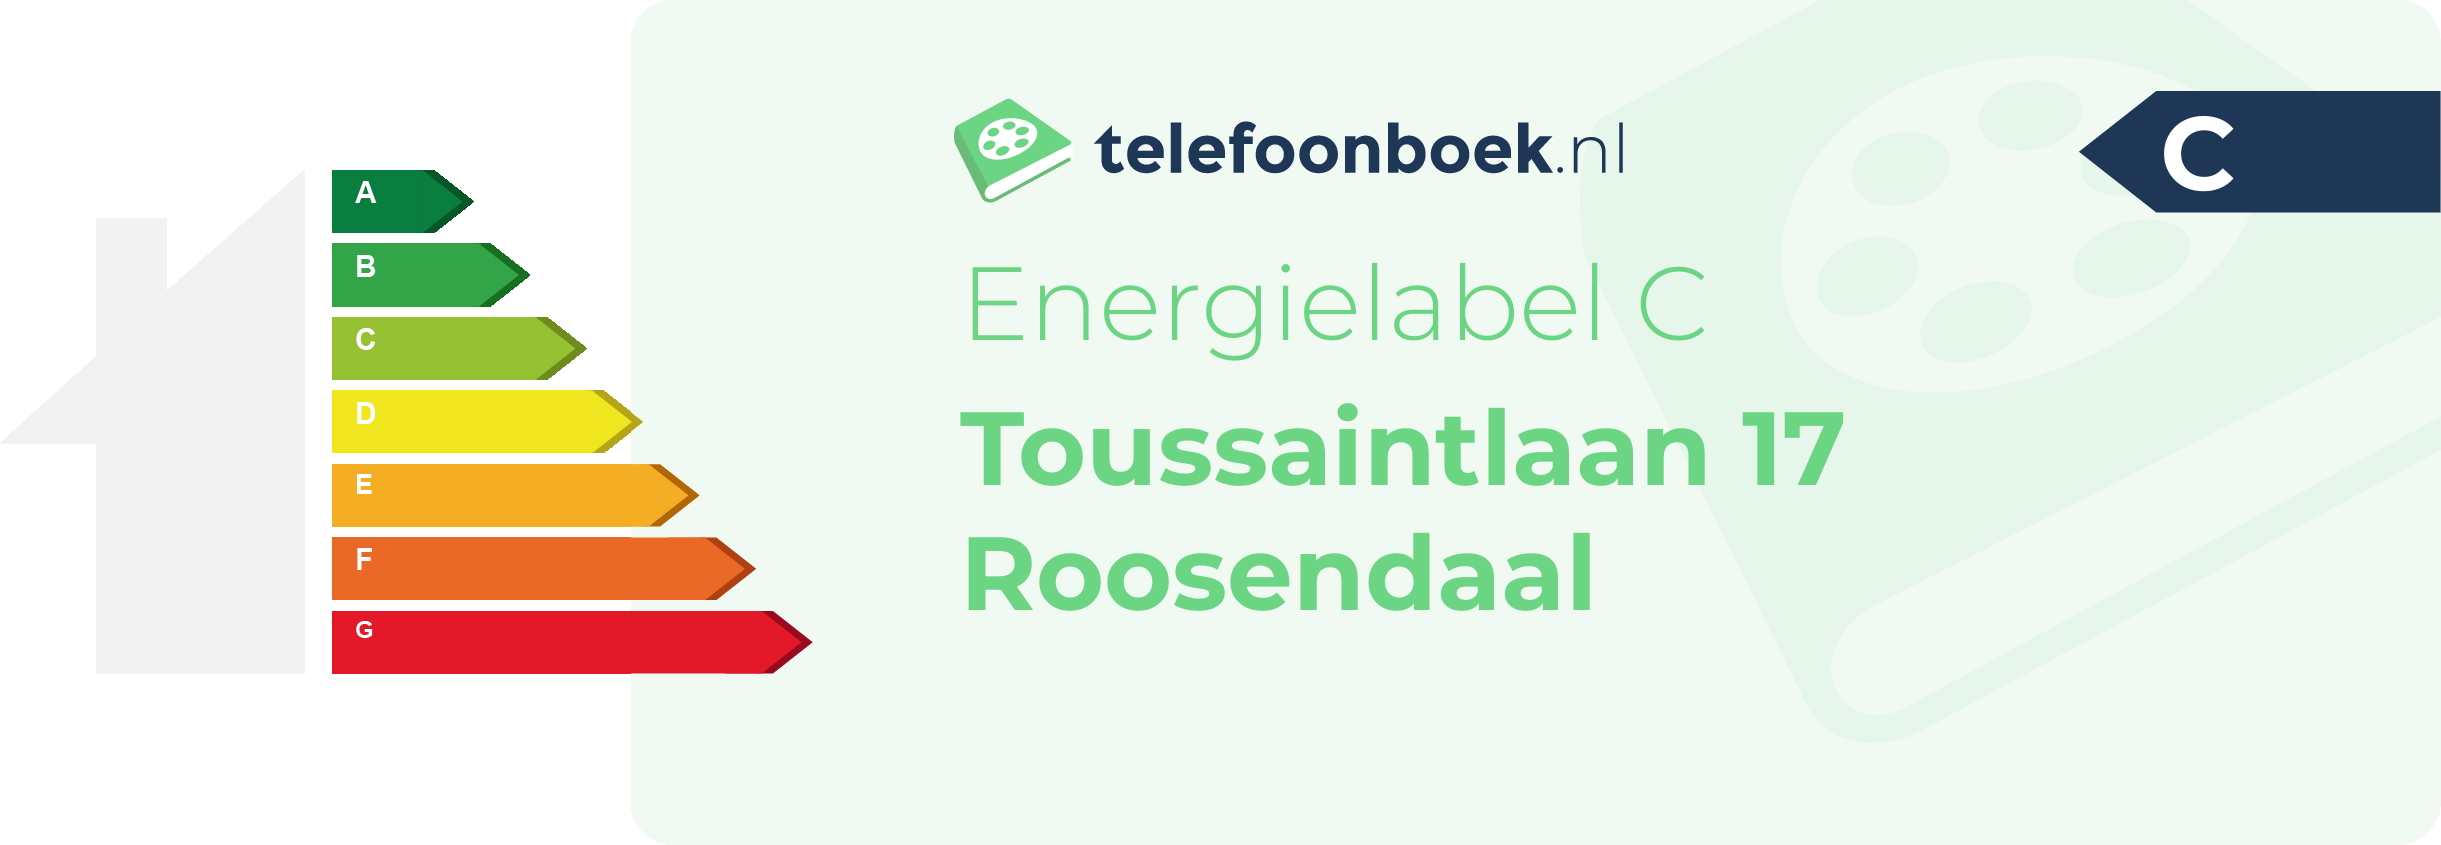 Energielabel Toussaintlaan 17 Roosendaal